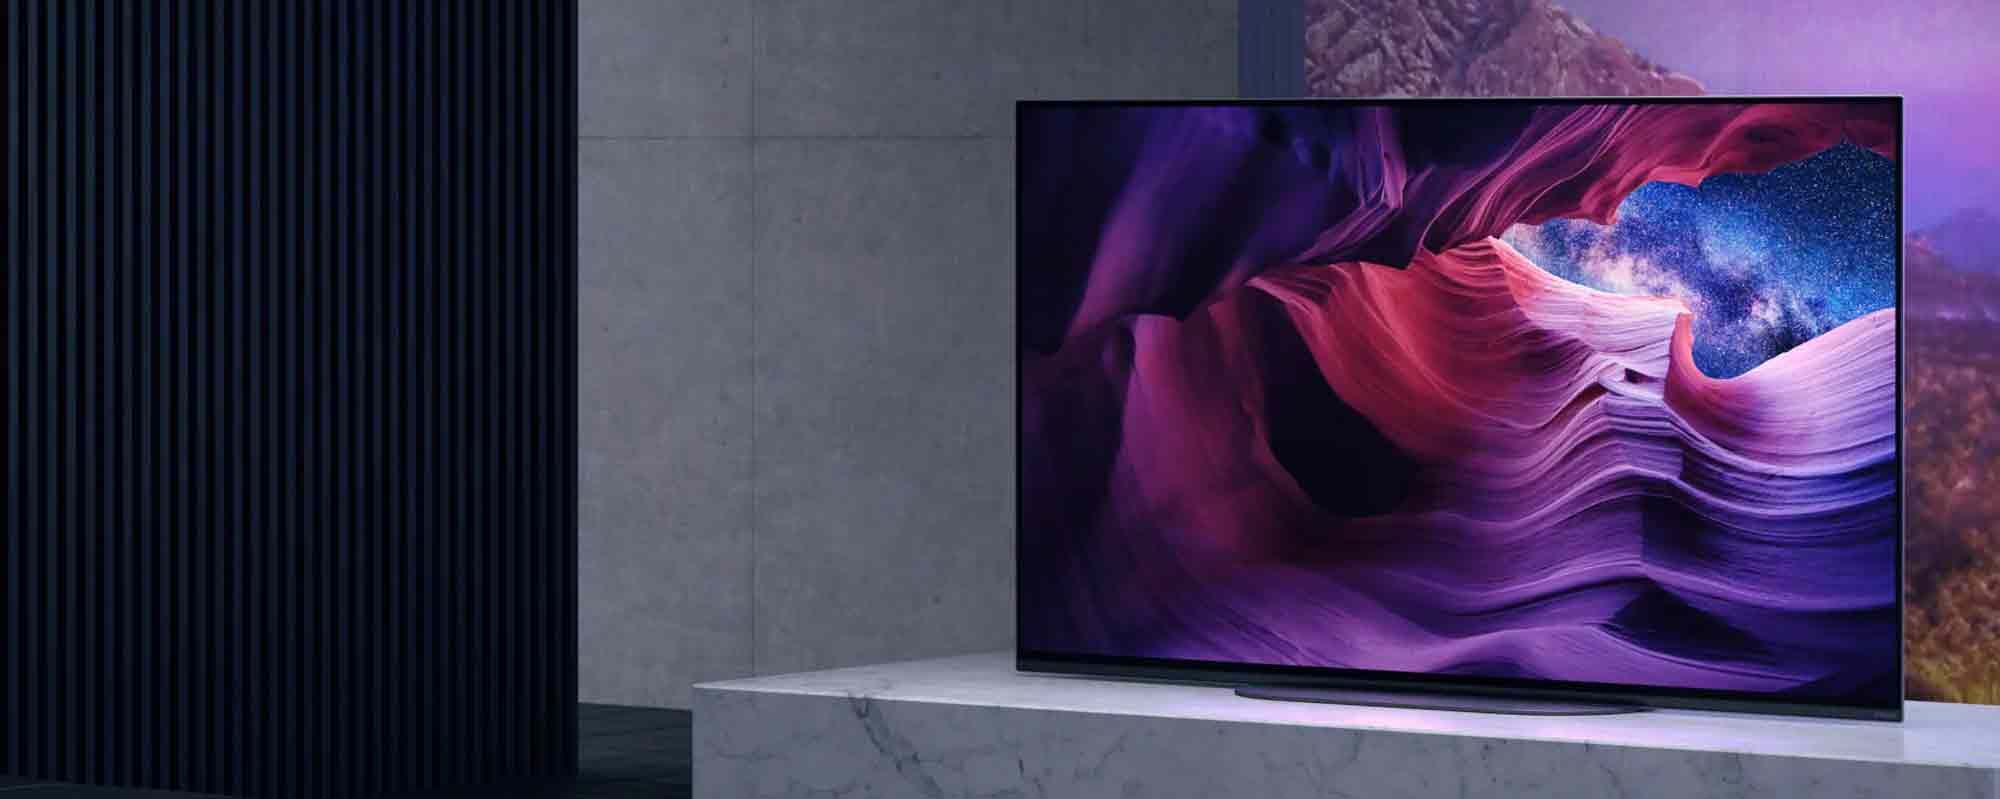 Sony image with purple tones on tv screen